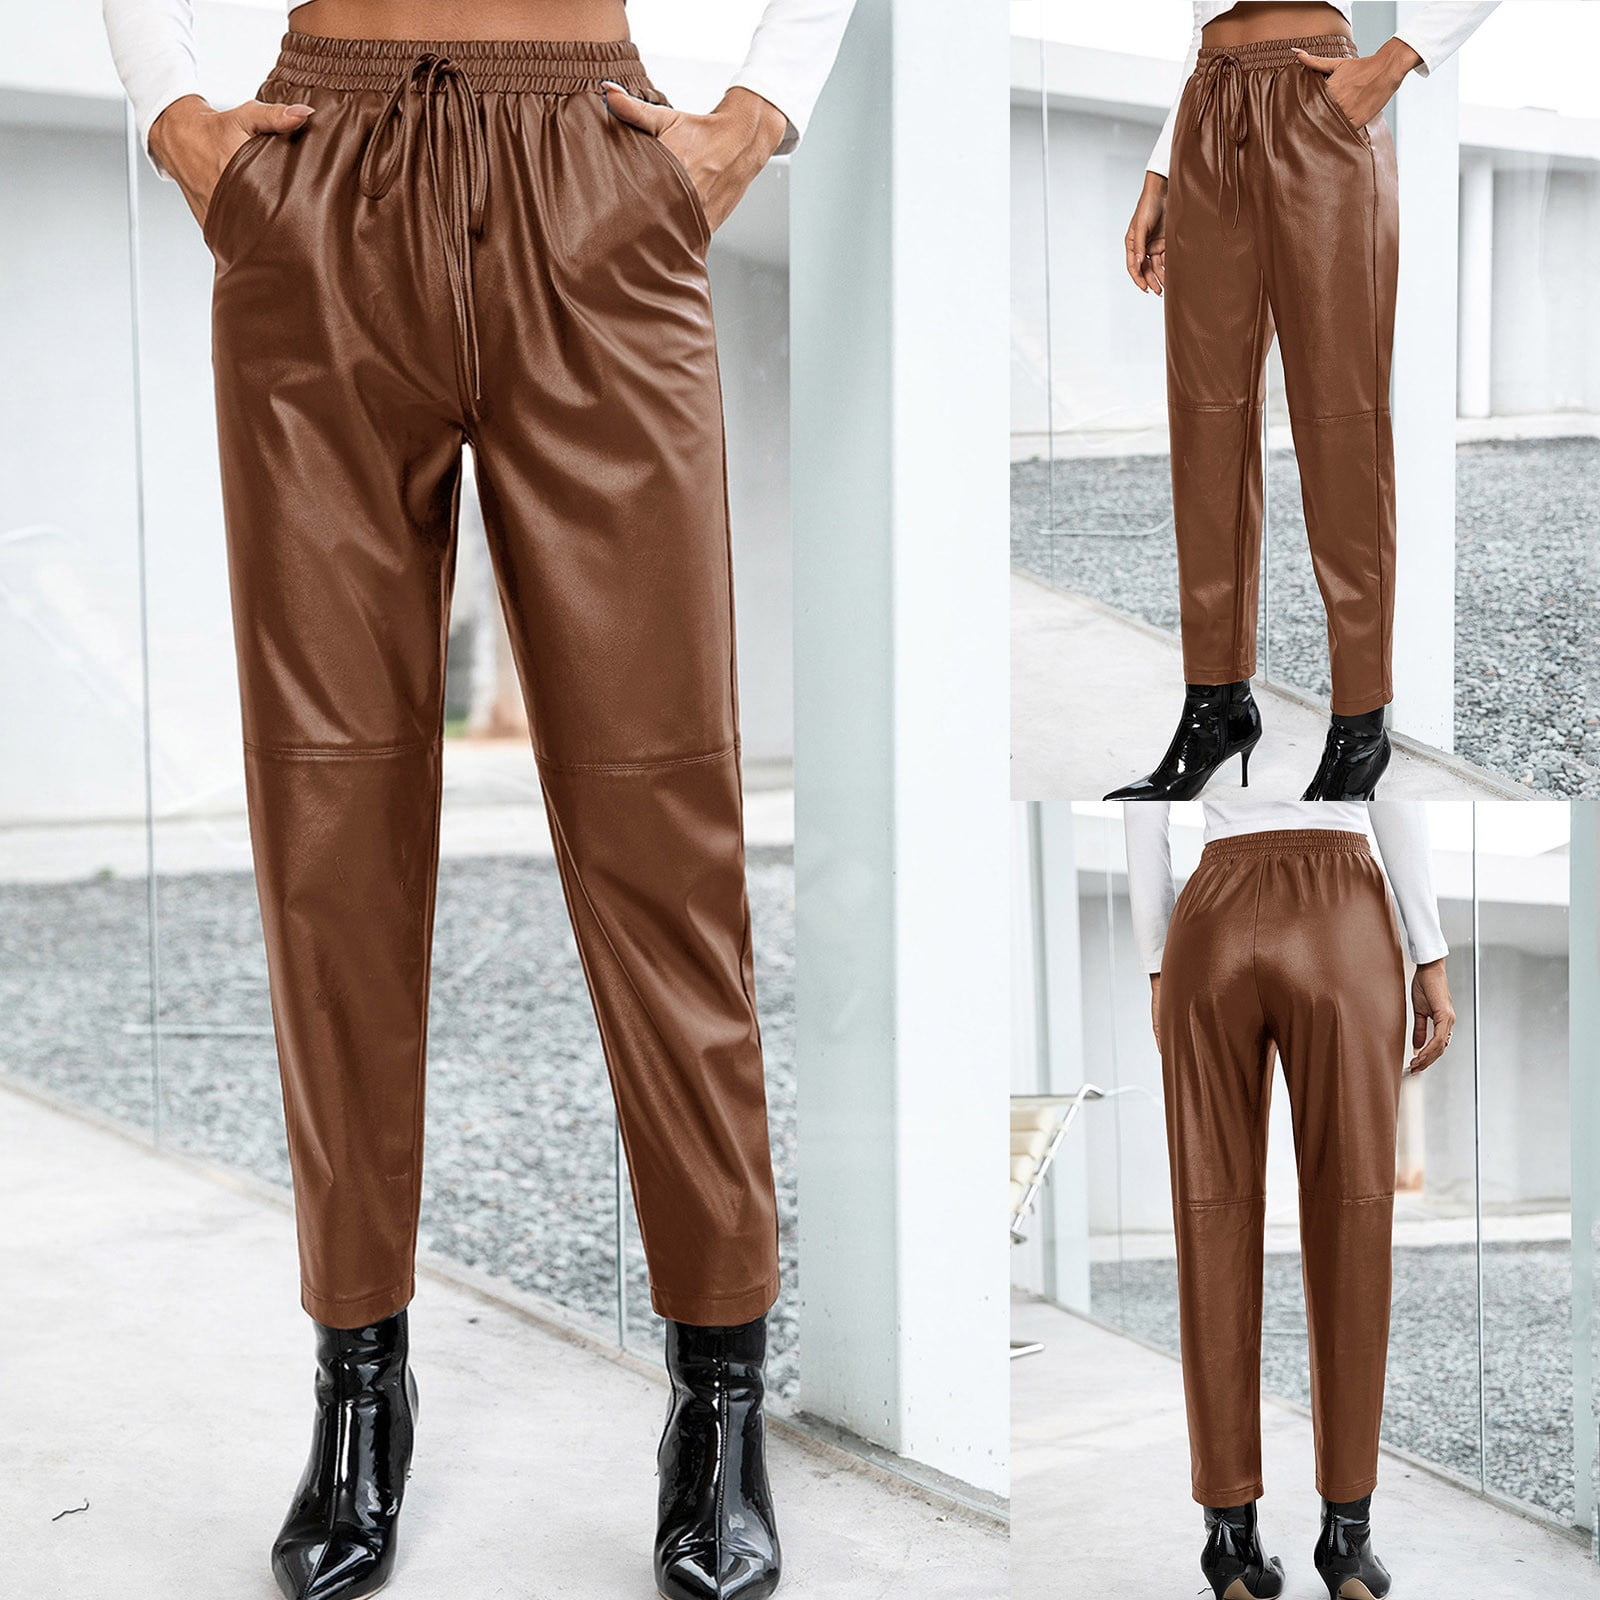 ASEIDFNSA Leather Pants Women Petite Spanks Leather Womens Leather